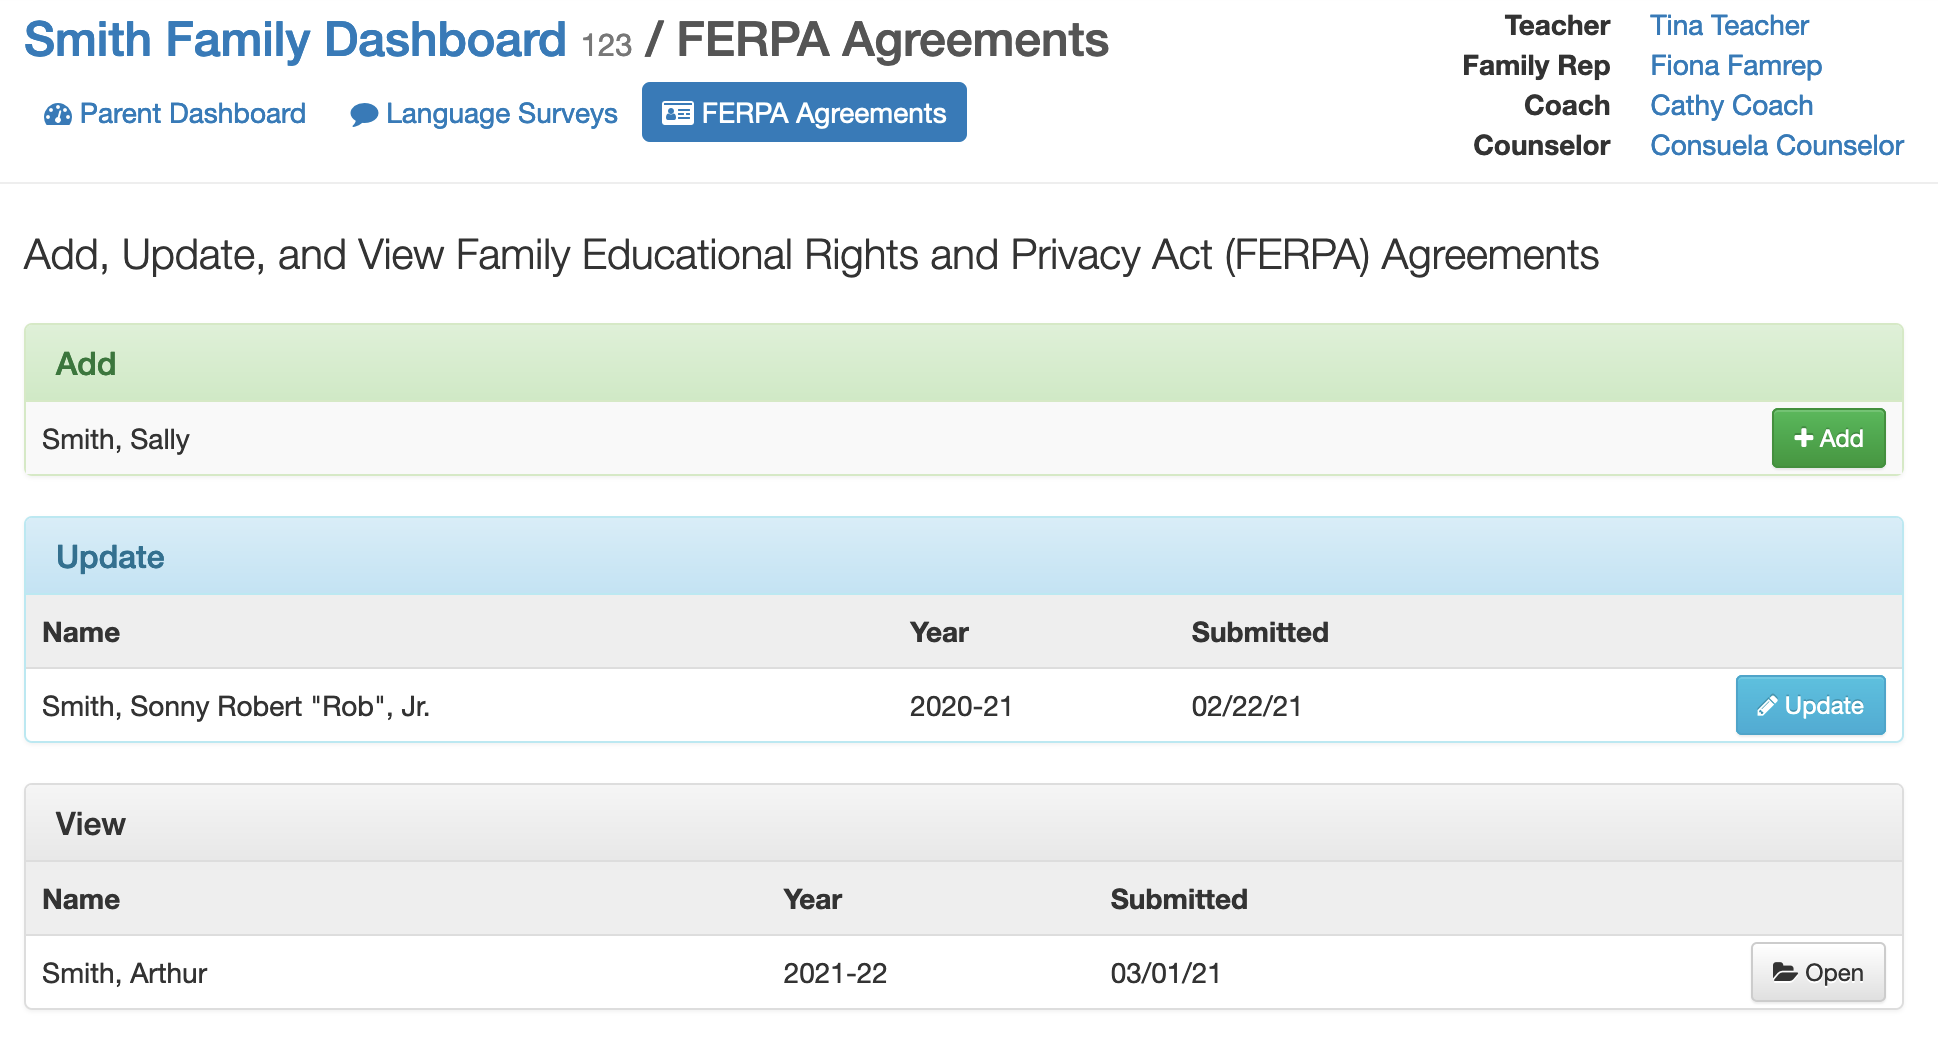 FERPA Agreements list